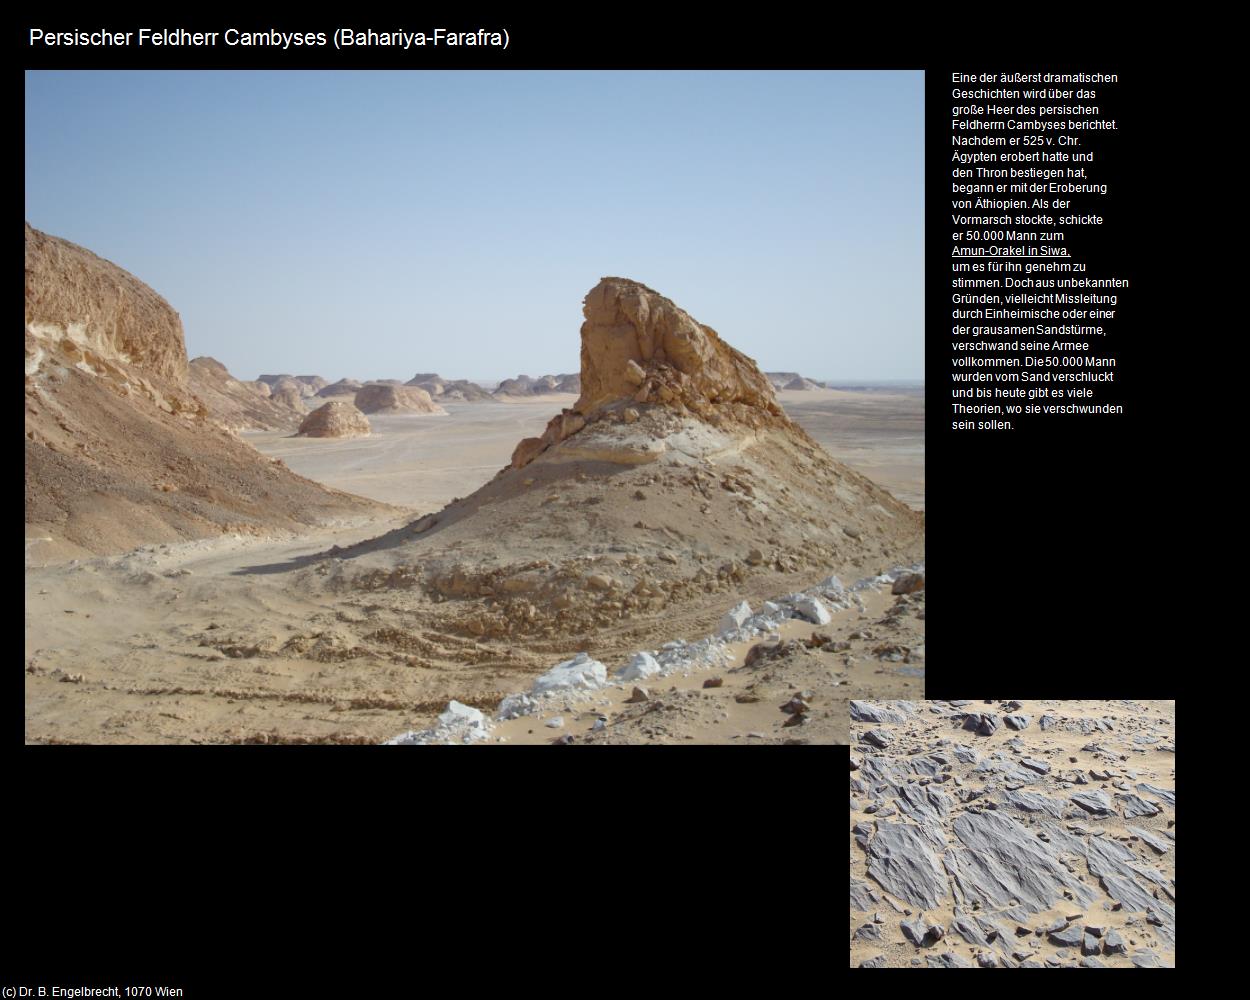 Persischer Feldherr Cambyses (Bahariya-Farafra, Westliche Wüste) in Kulturatlas-ÄGYPTEN(c)B.Engelbrecht